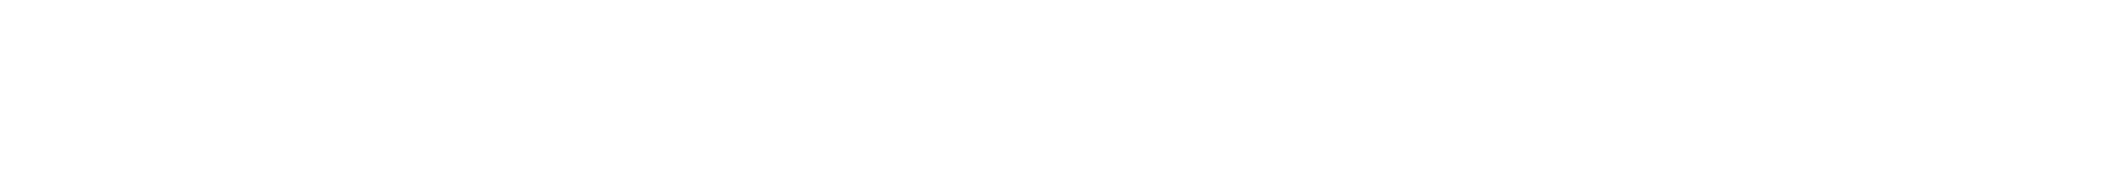 Dentrix Ascend Logo